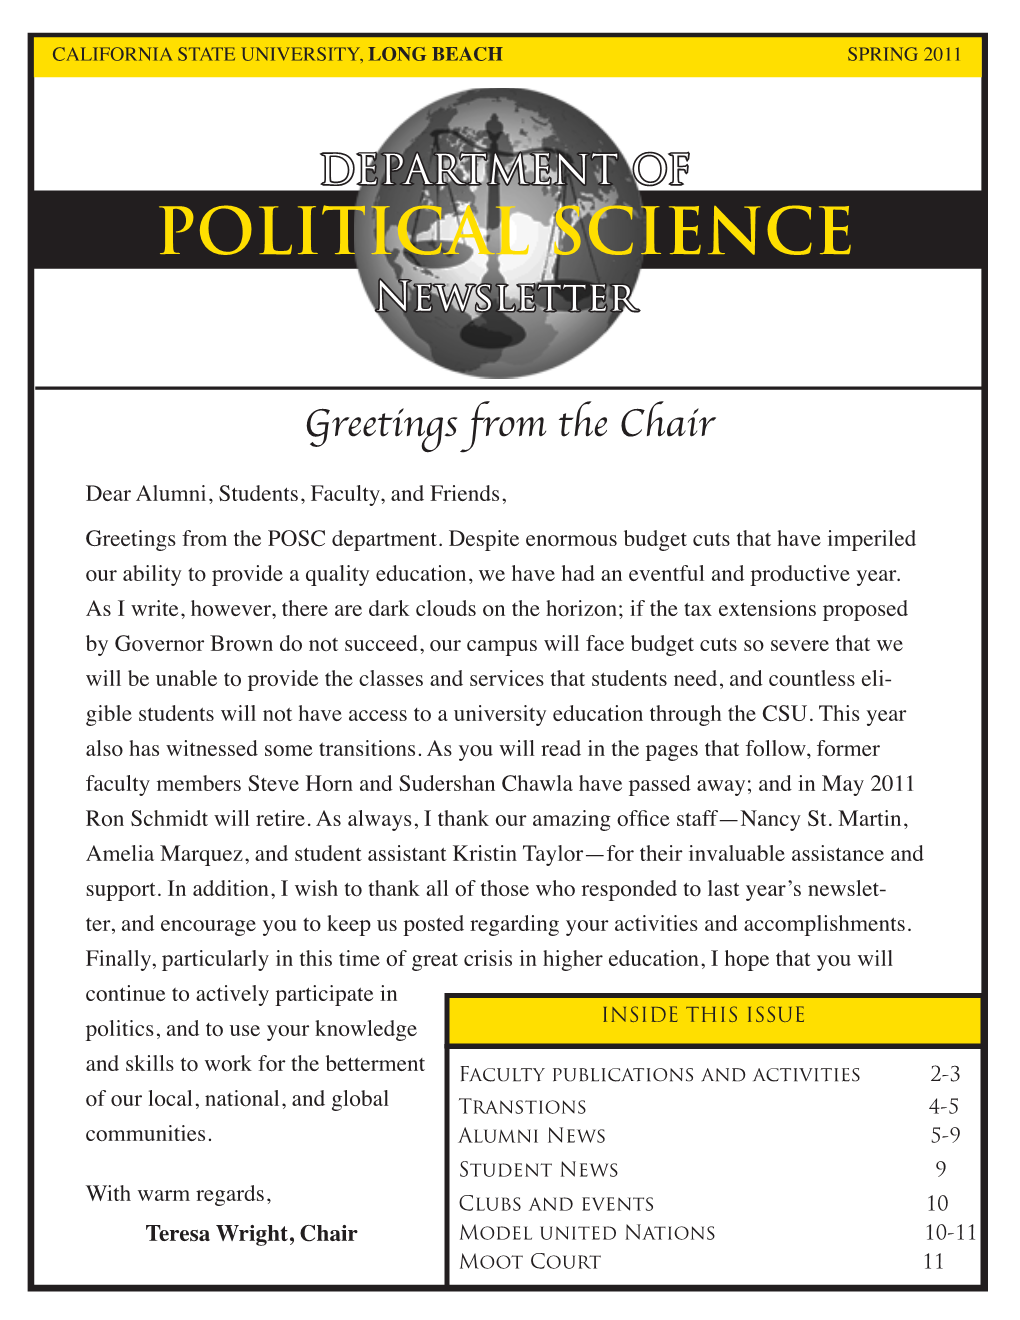 POLITICAL SCIENCE Newsletter